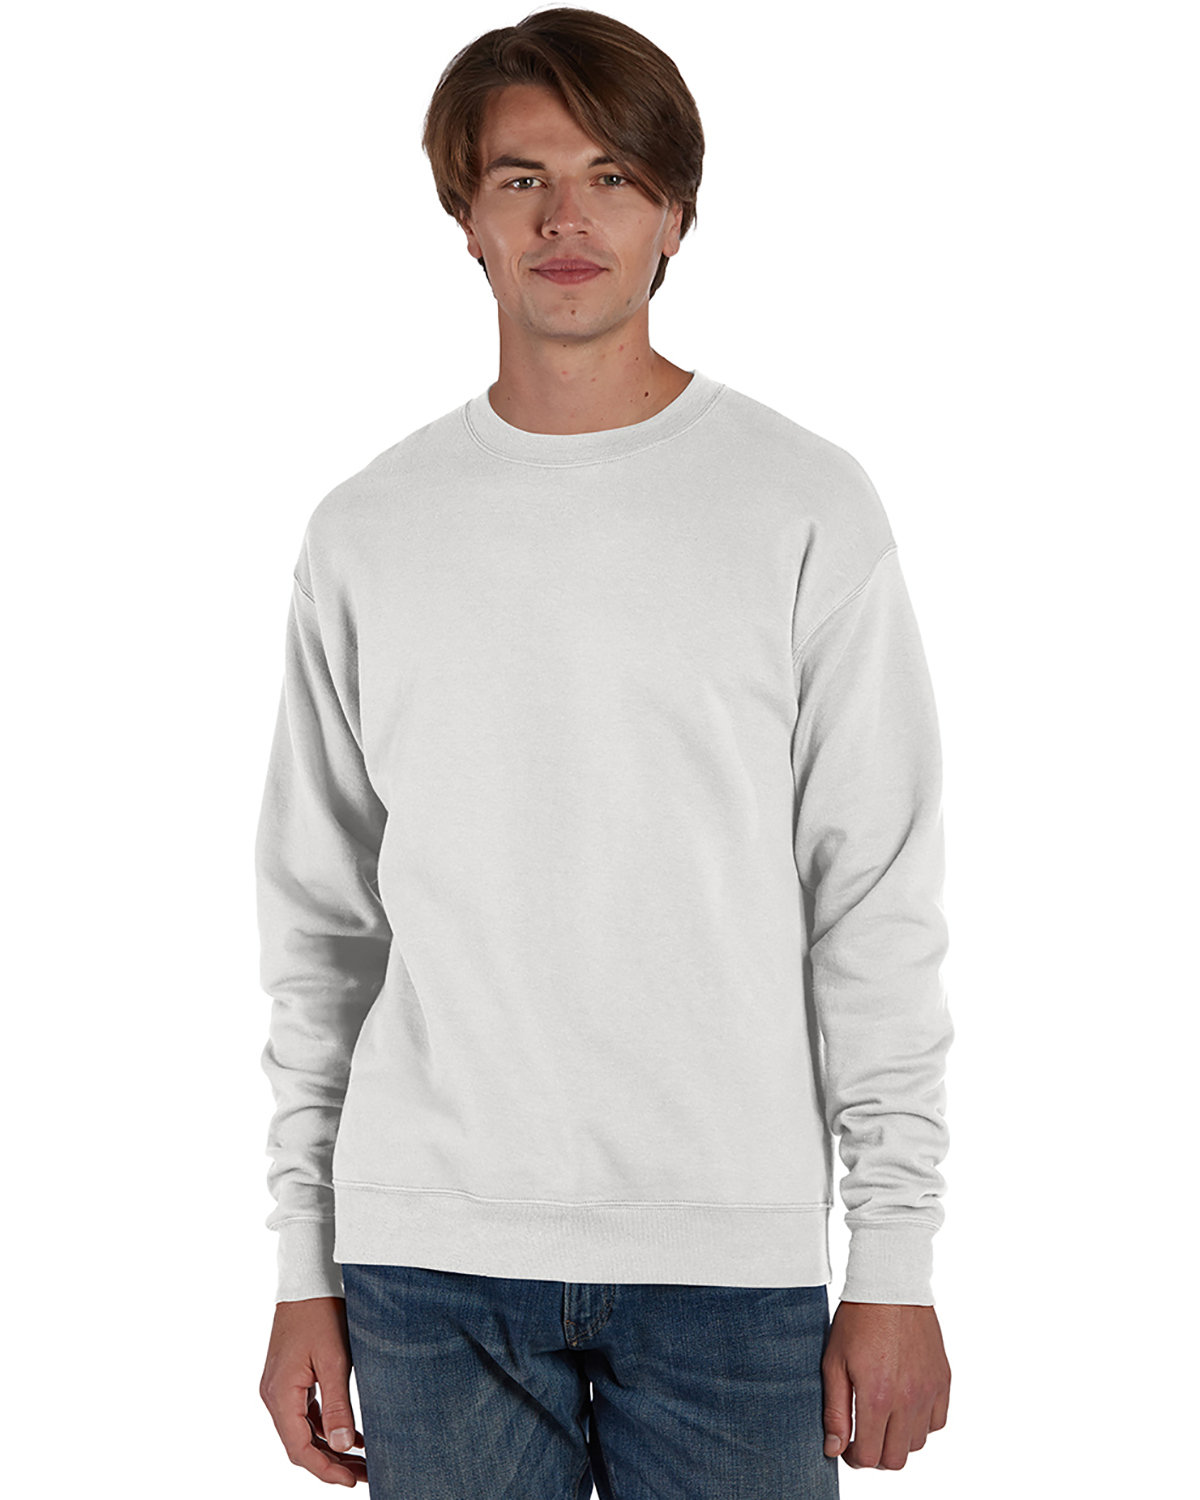 Hanes Adult Perfect Sweats Crewneck Sweatshirt